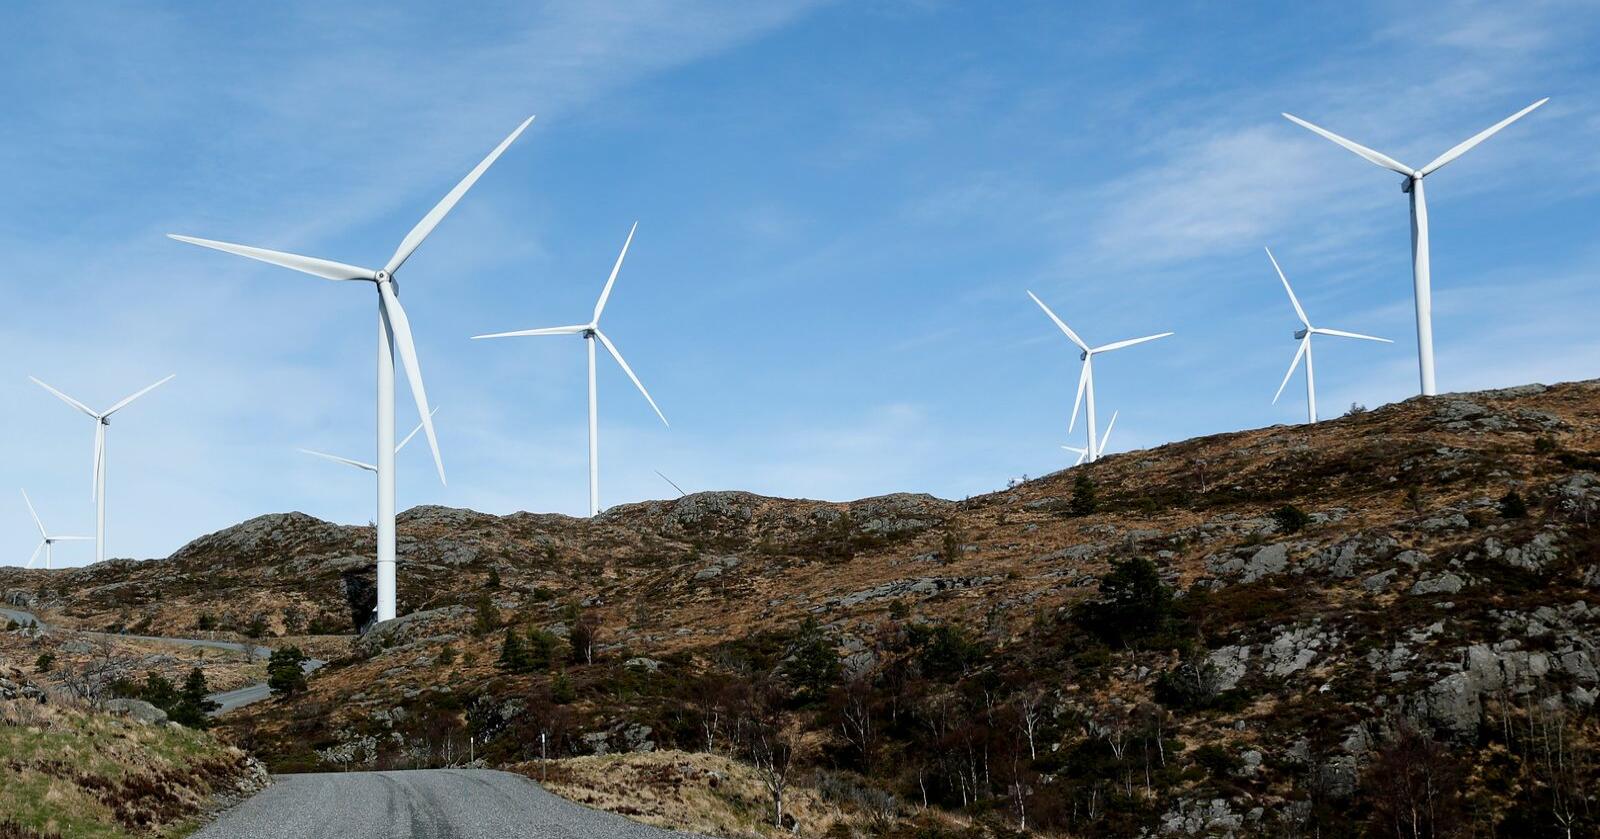 Olje- og energiminister Marte Mjøs Persen (Ap) sier regjeringen ønsker mer vindkraft på land, i tillegg til havvind. Foto: Jan Kåre Ness / NTB